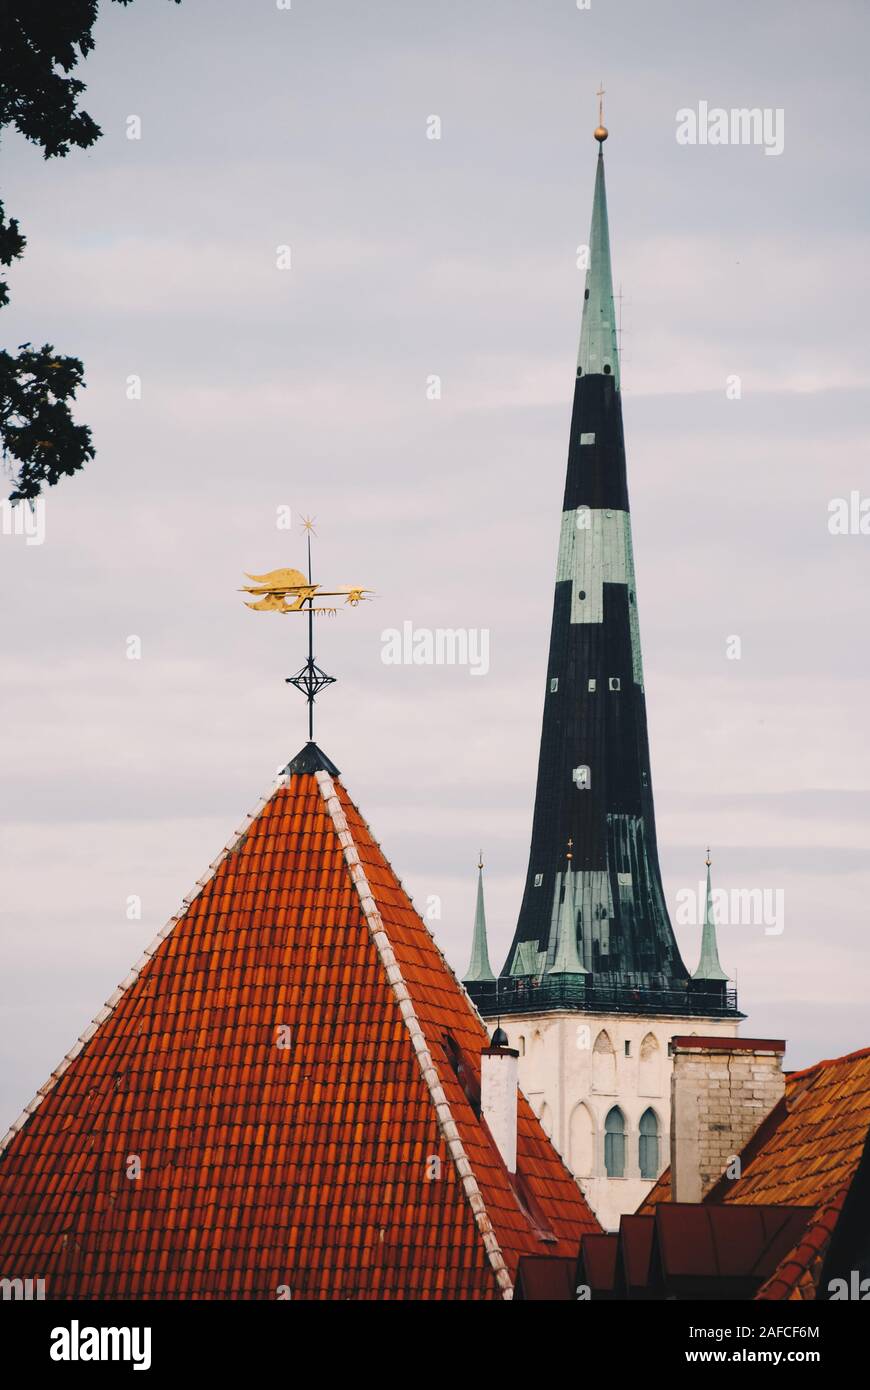 St. Olav's Church tall tower in Tallin Stock Photo - Alamy